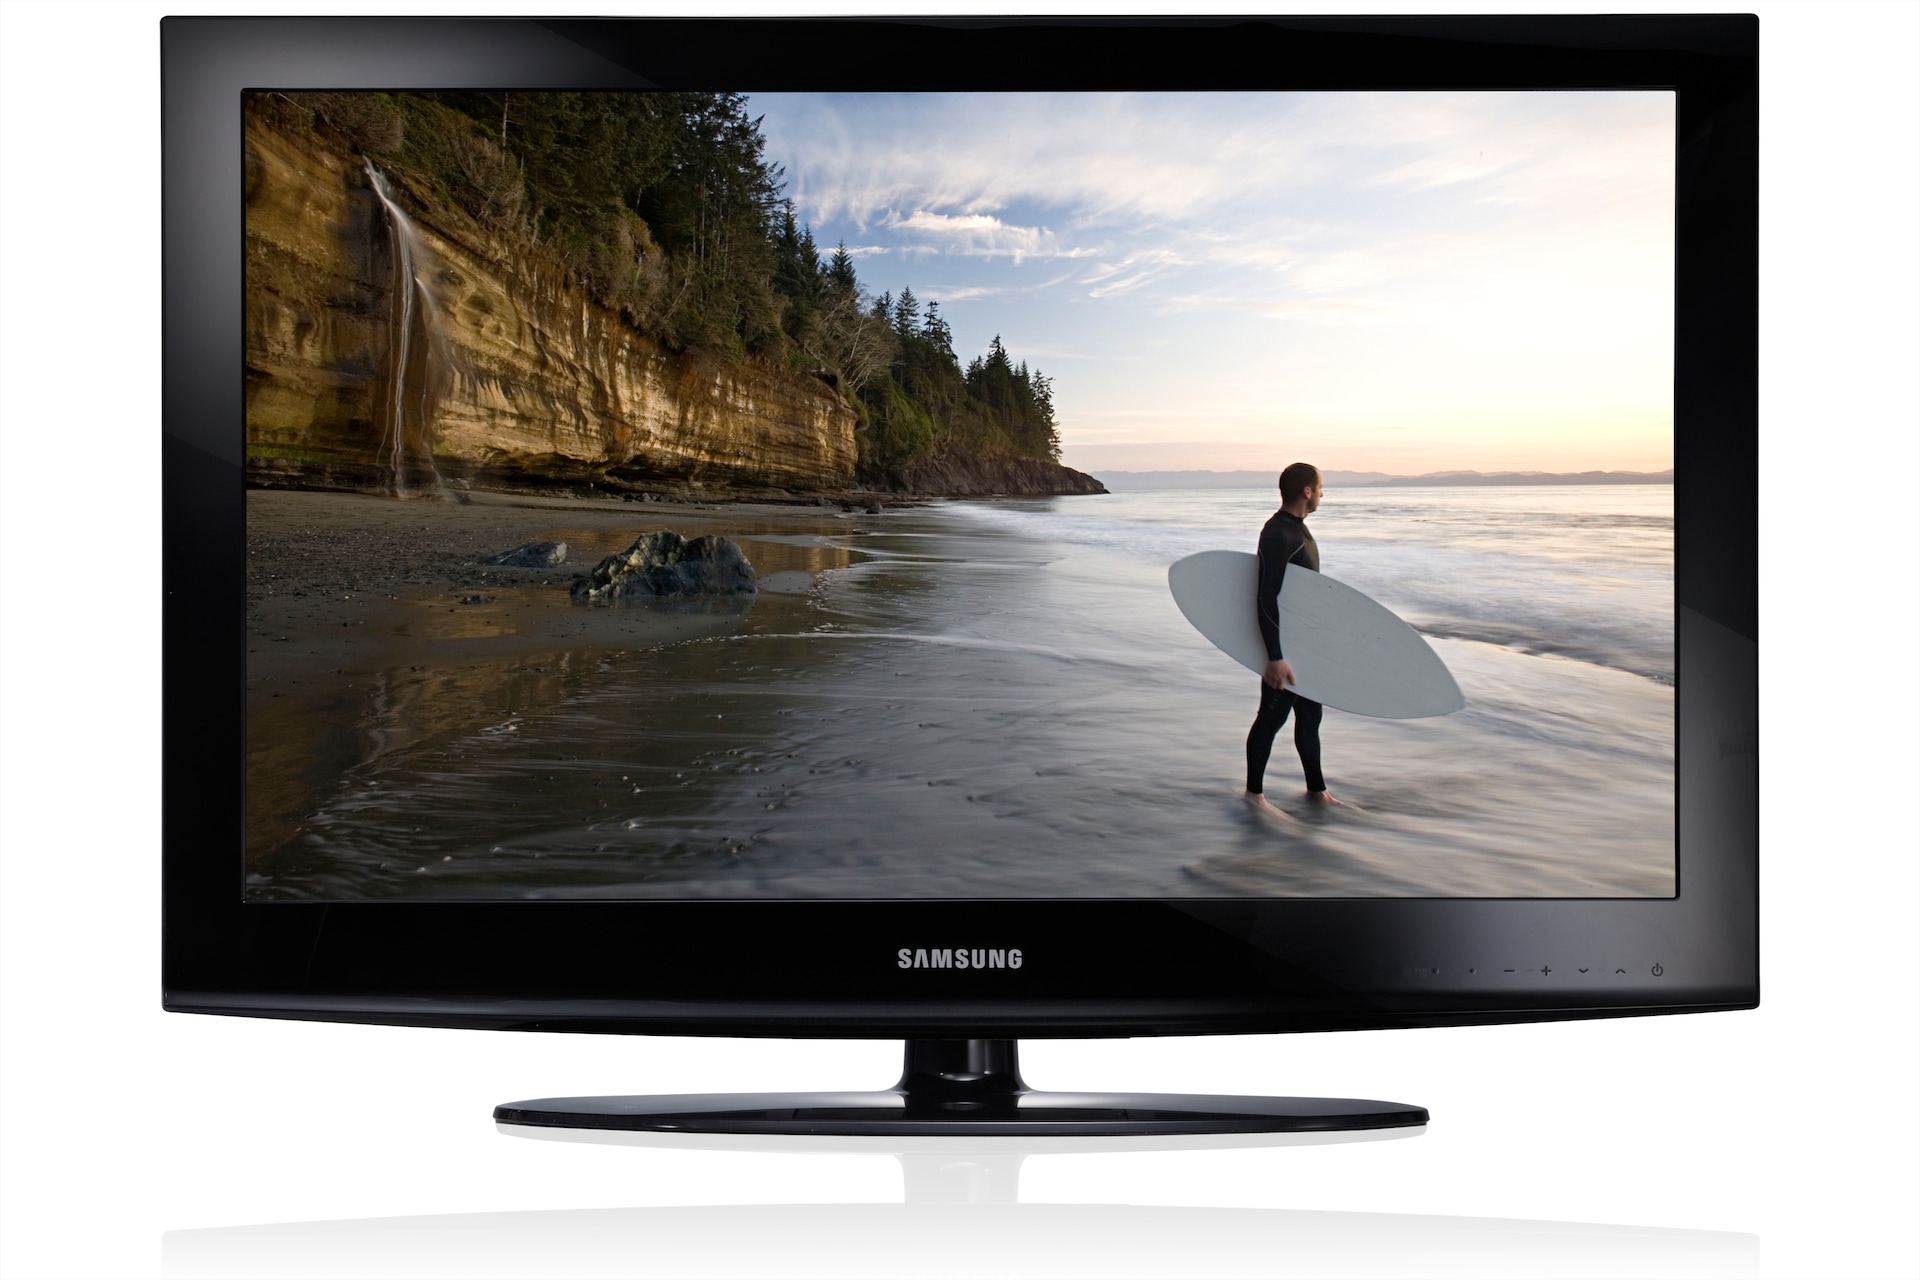 Телевизор Samsung ue32es6307 32". Телевизор Samsung ps51e537 51". Samsung ue32es6307 led. Телевизор Samsung ue37es6100 37".